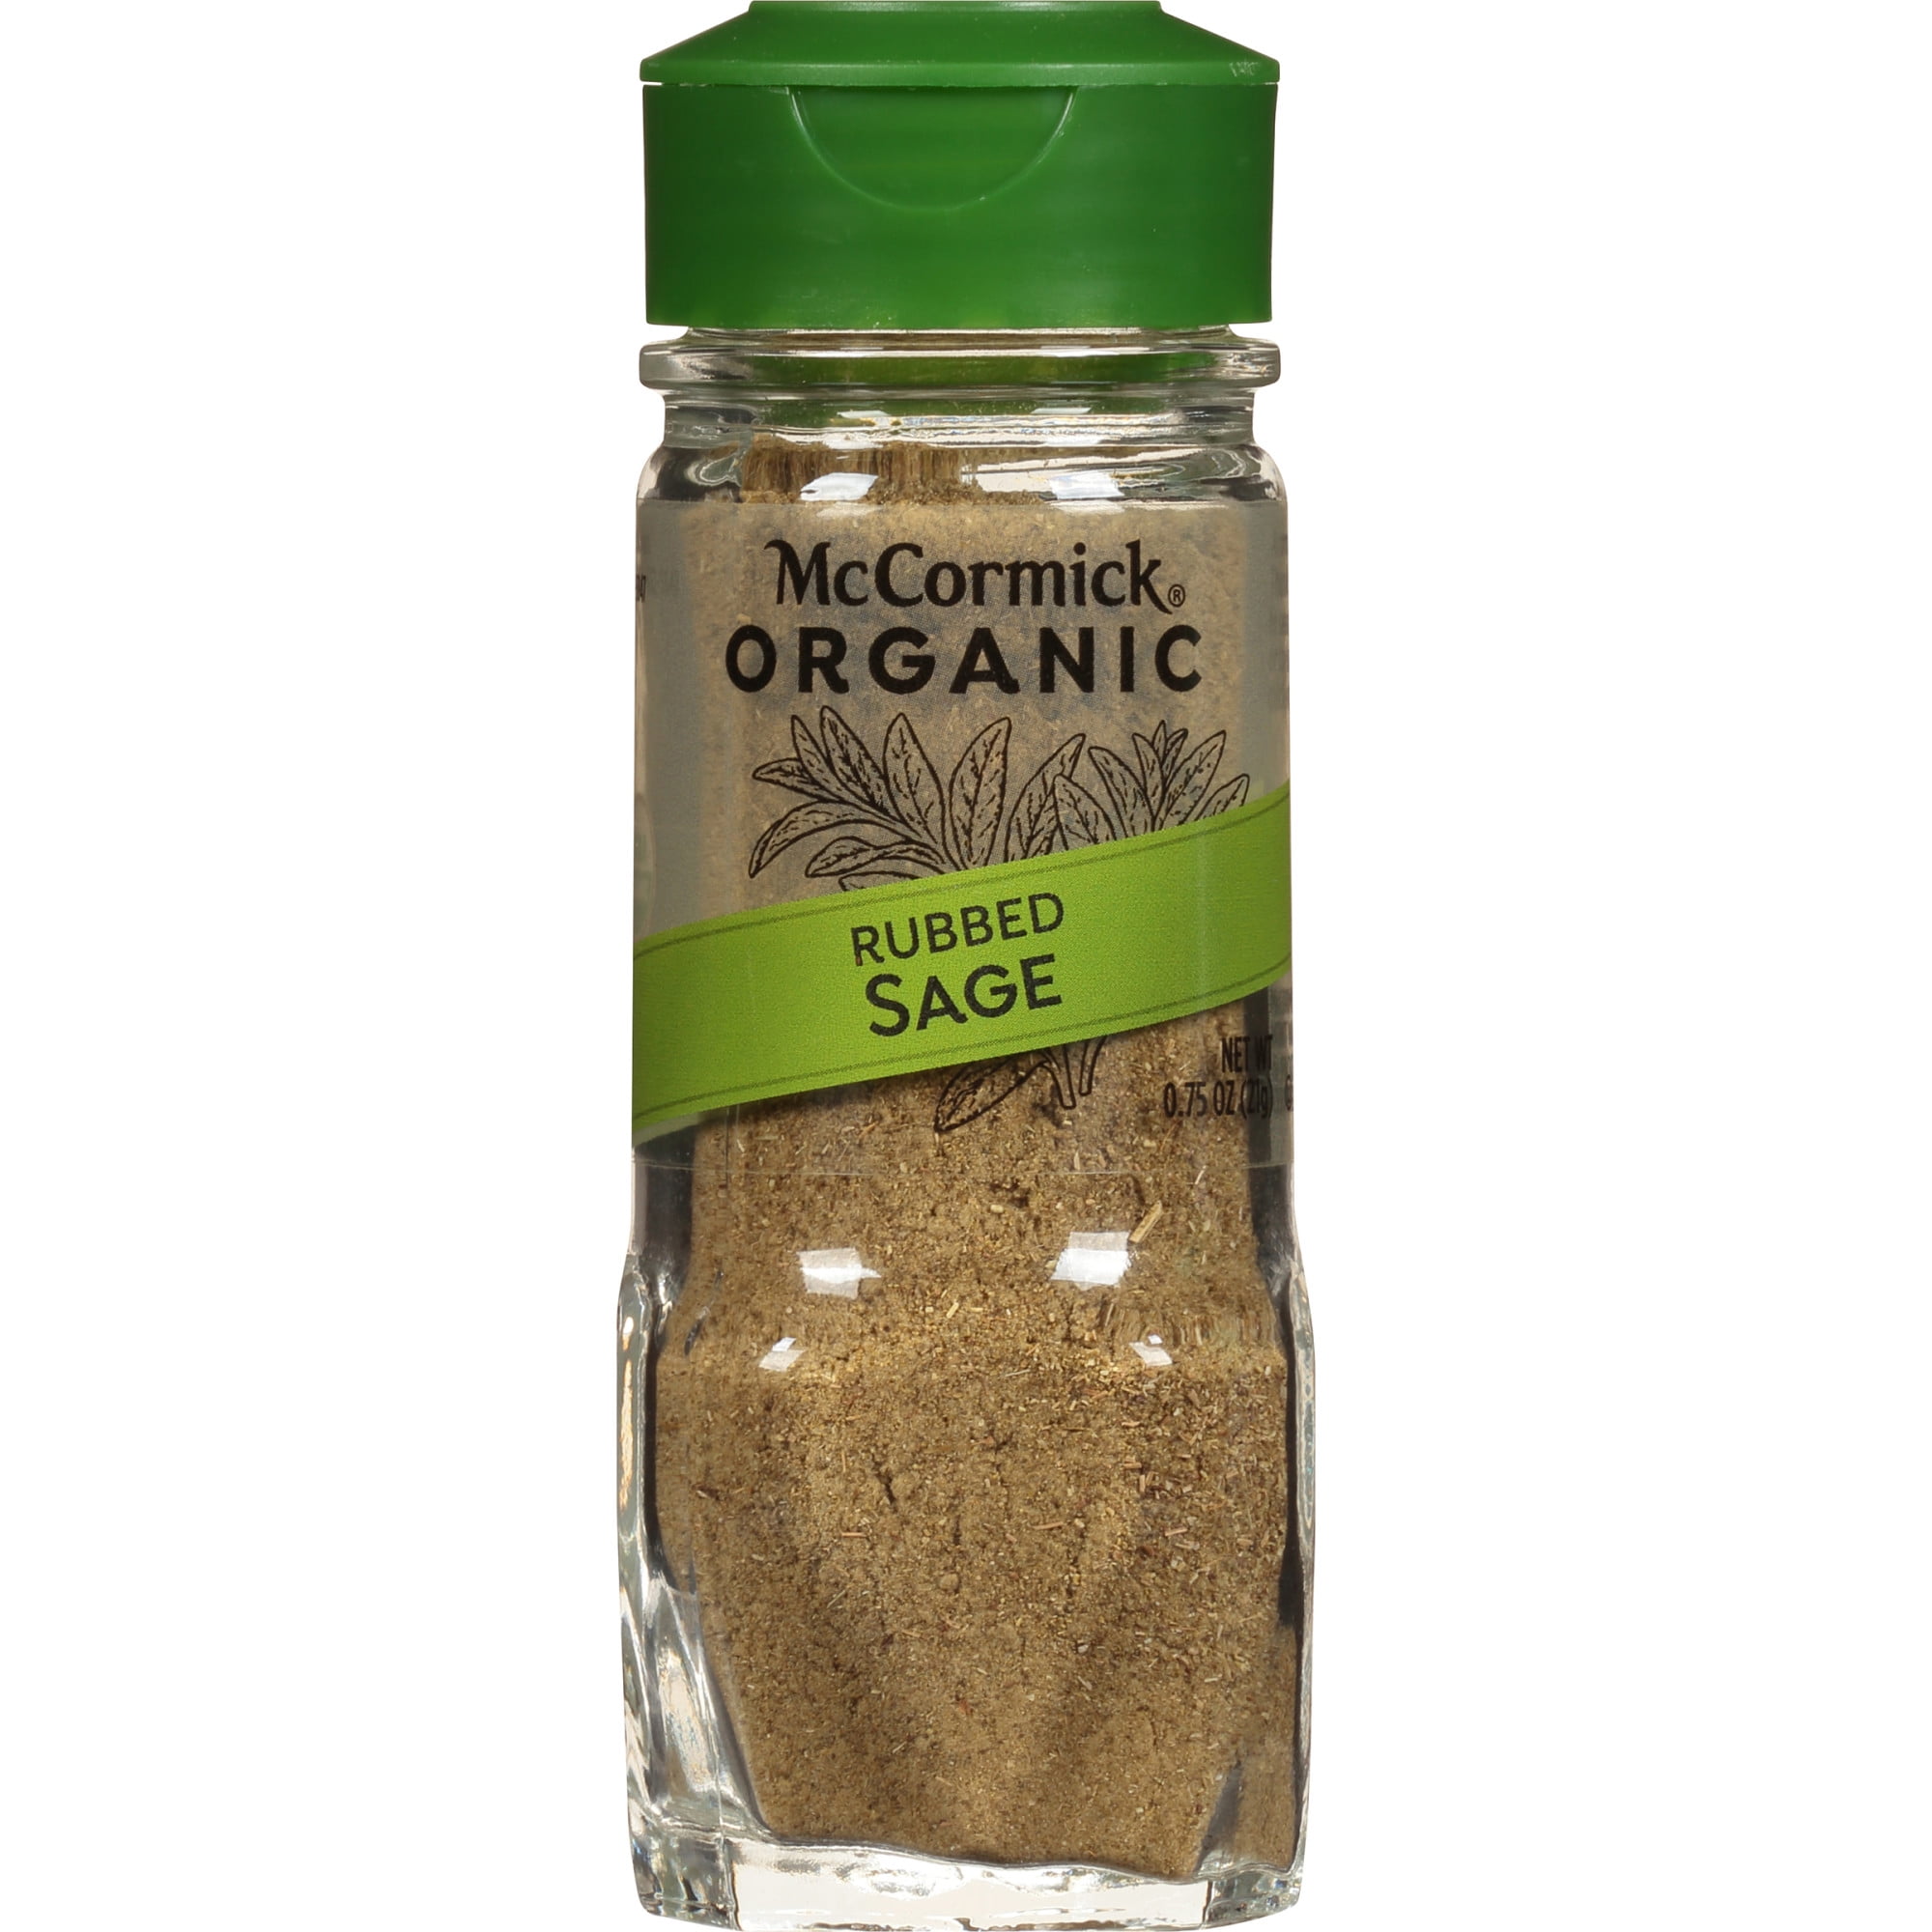 Organic Rubbed Sage, 0.8 oz (22 g)